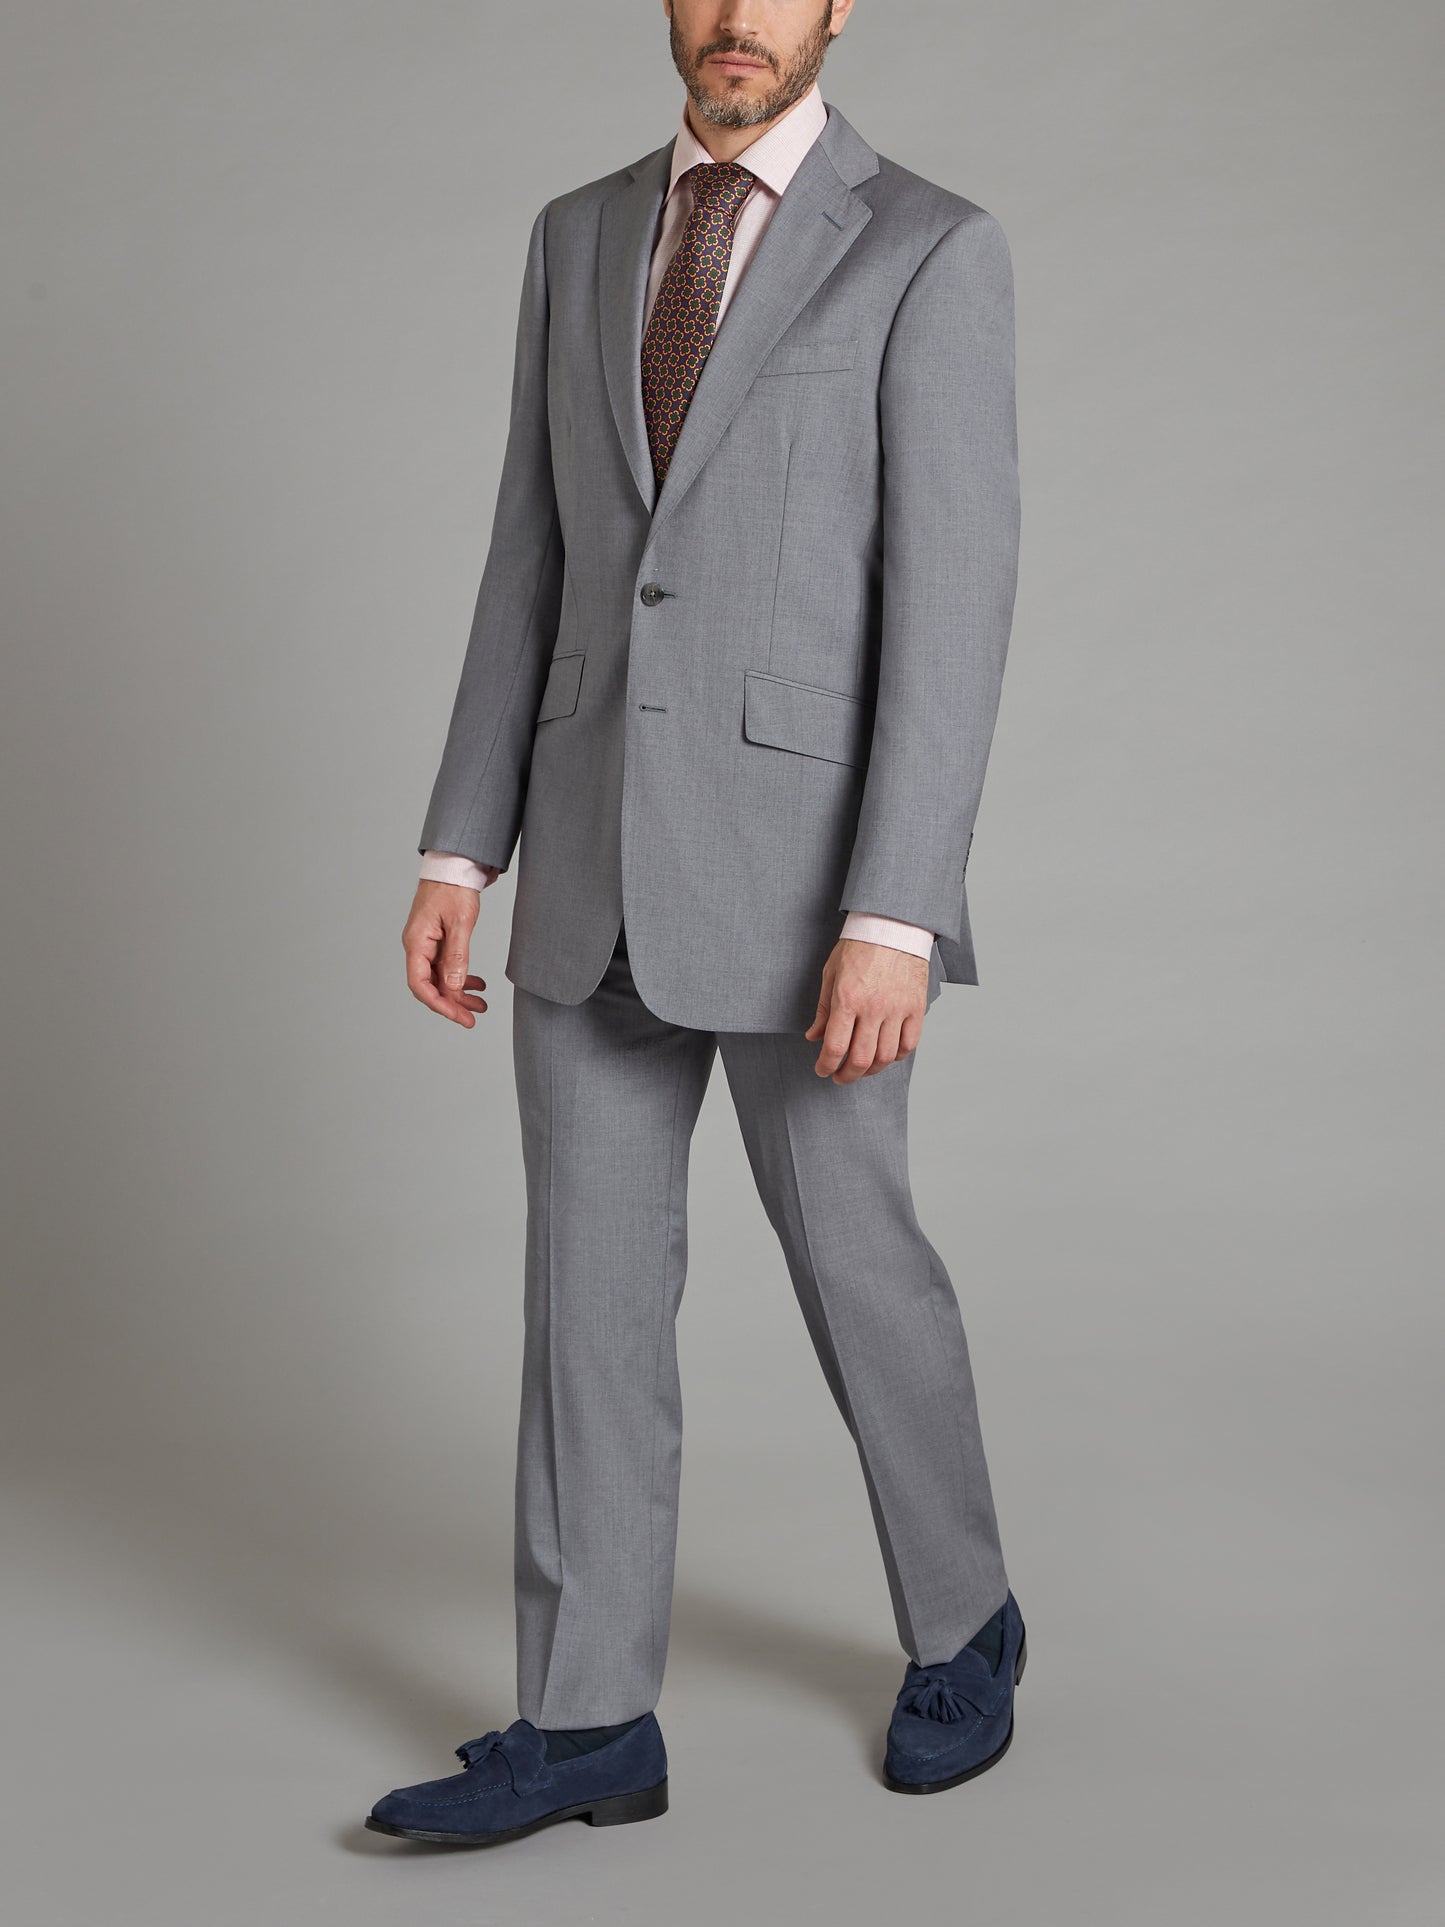 Limited Edition Eaton Suit - Plain Grey Lightweight